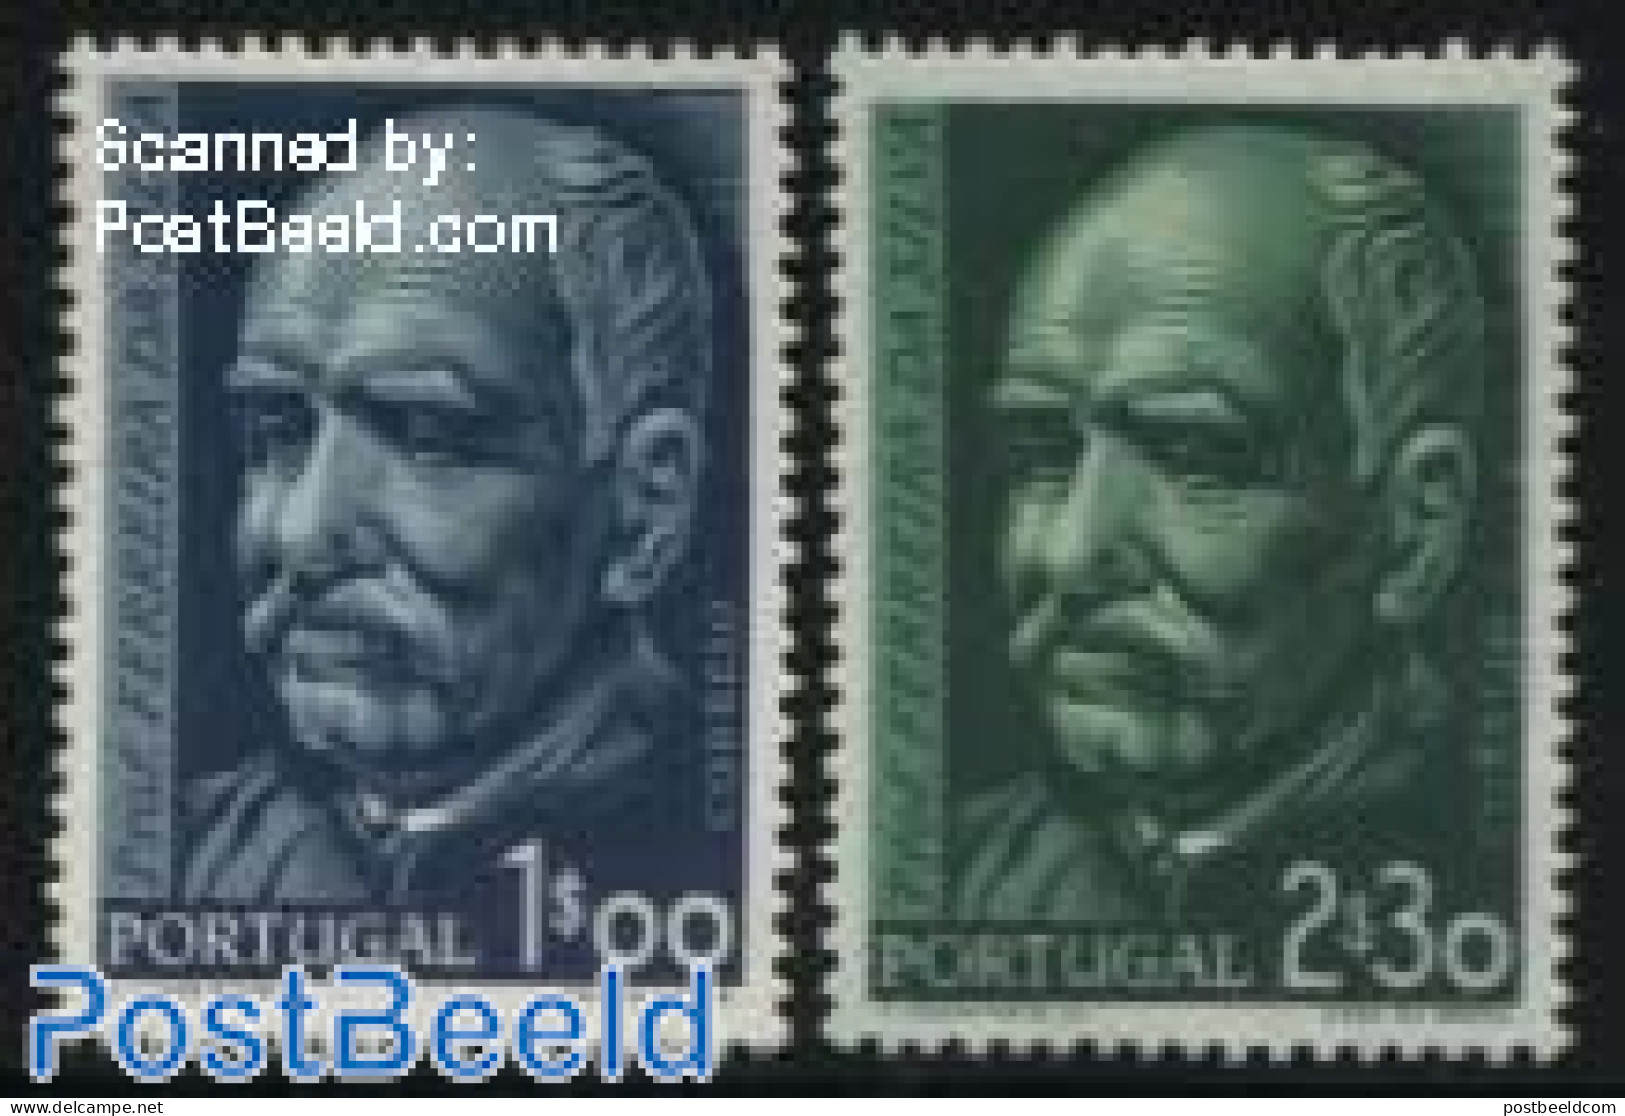 Portugal 1956 Ferreira Da Silva 2v, Mint NH, Science - Chemistry & Chemists - Unused Stamps